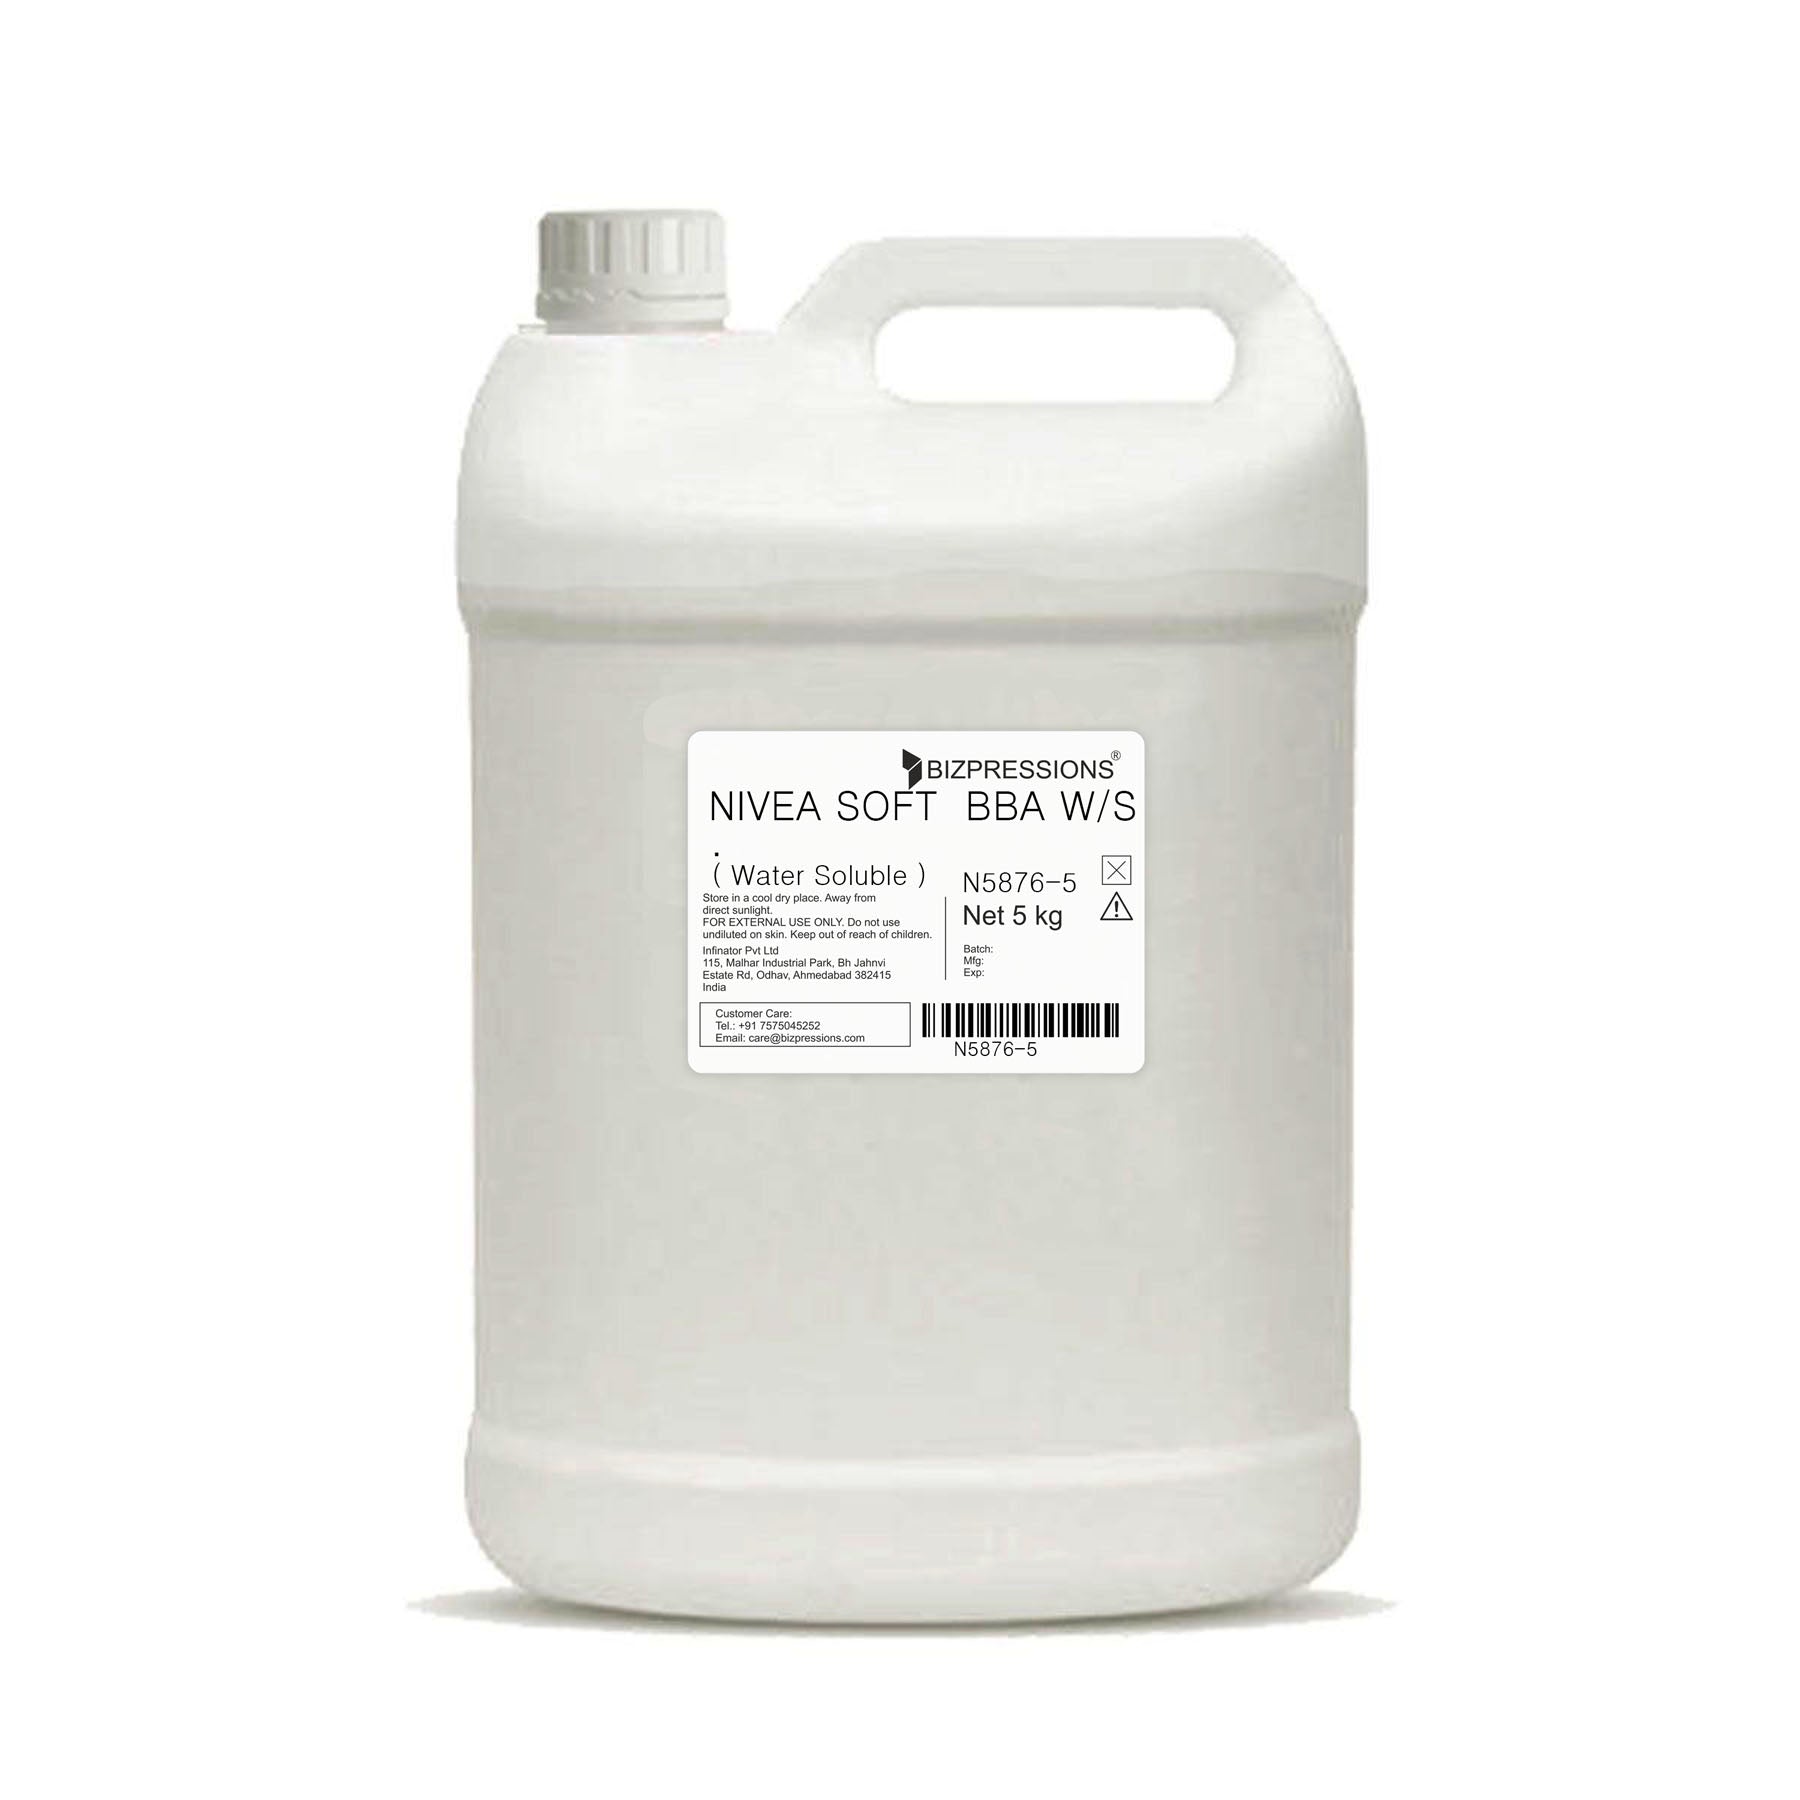 NIVEA SOFT B.B.A. W/S - Fragrance ( Water Soluble ) - 5 kg